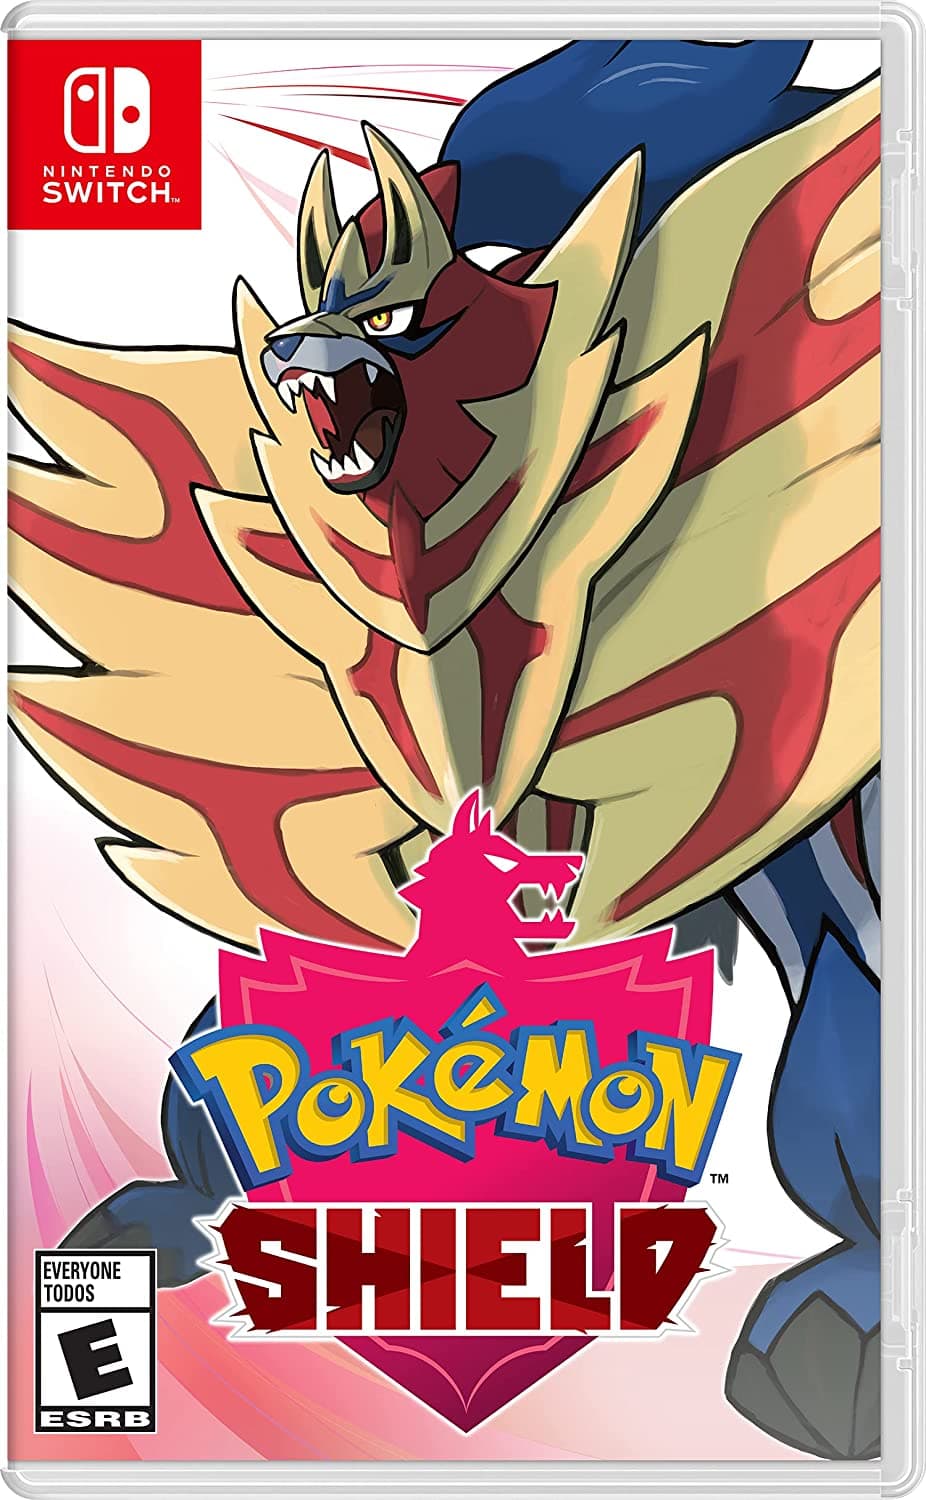 Pokemon Shield for Nintendo Switch artwork.